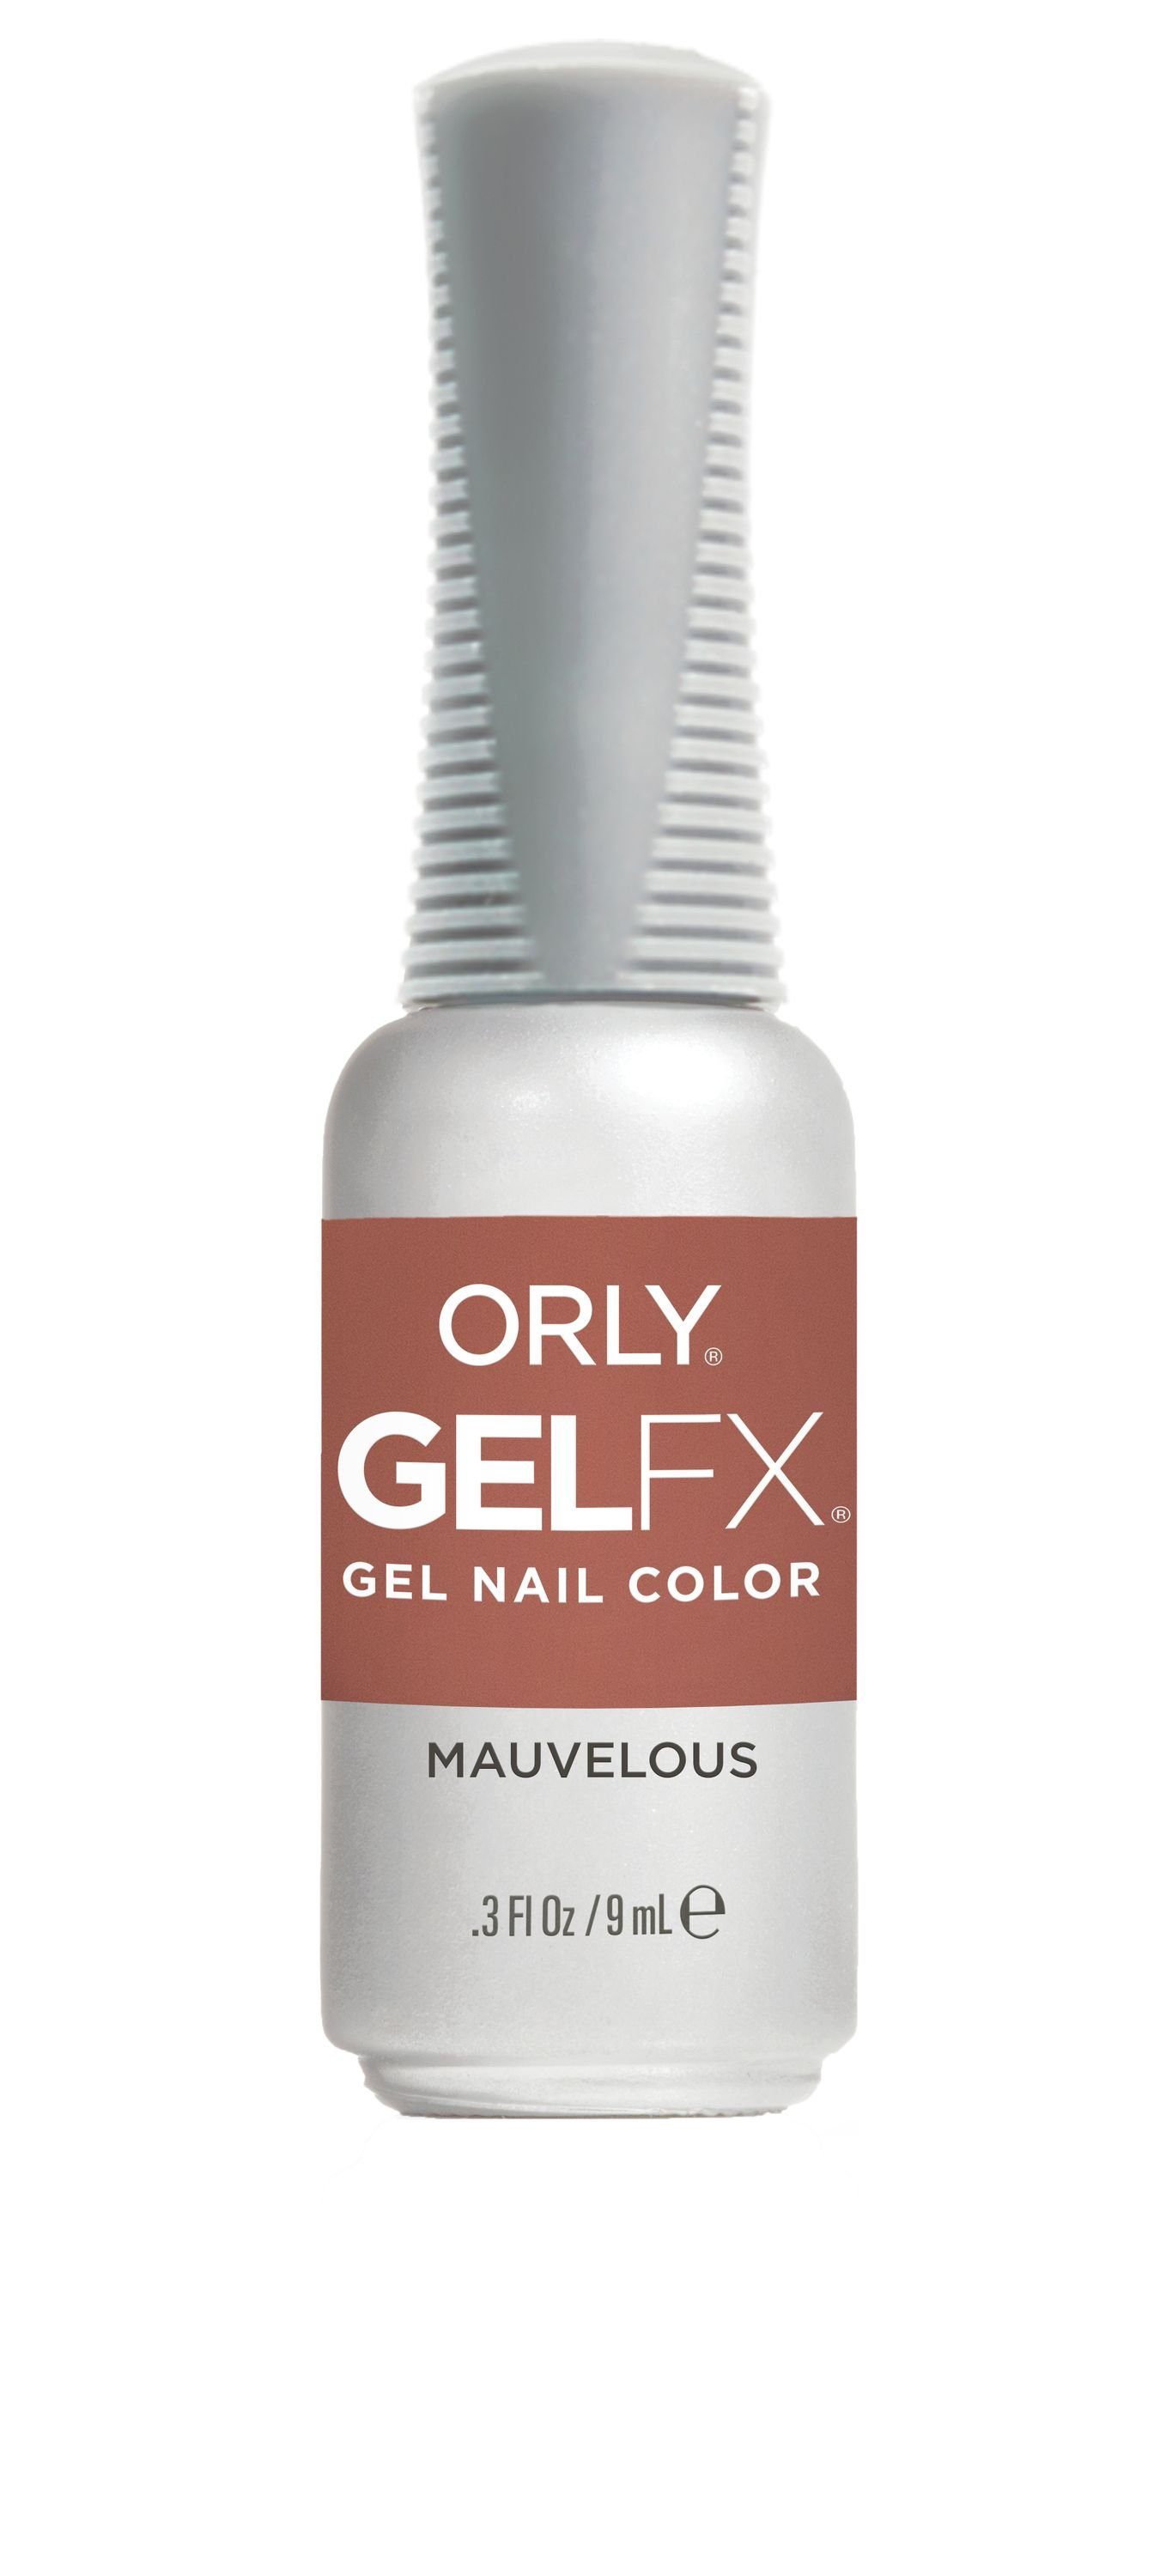 ORLY UV-Nagellack GEL FX Mauvelous*, 9ML